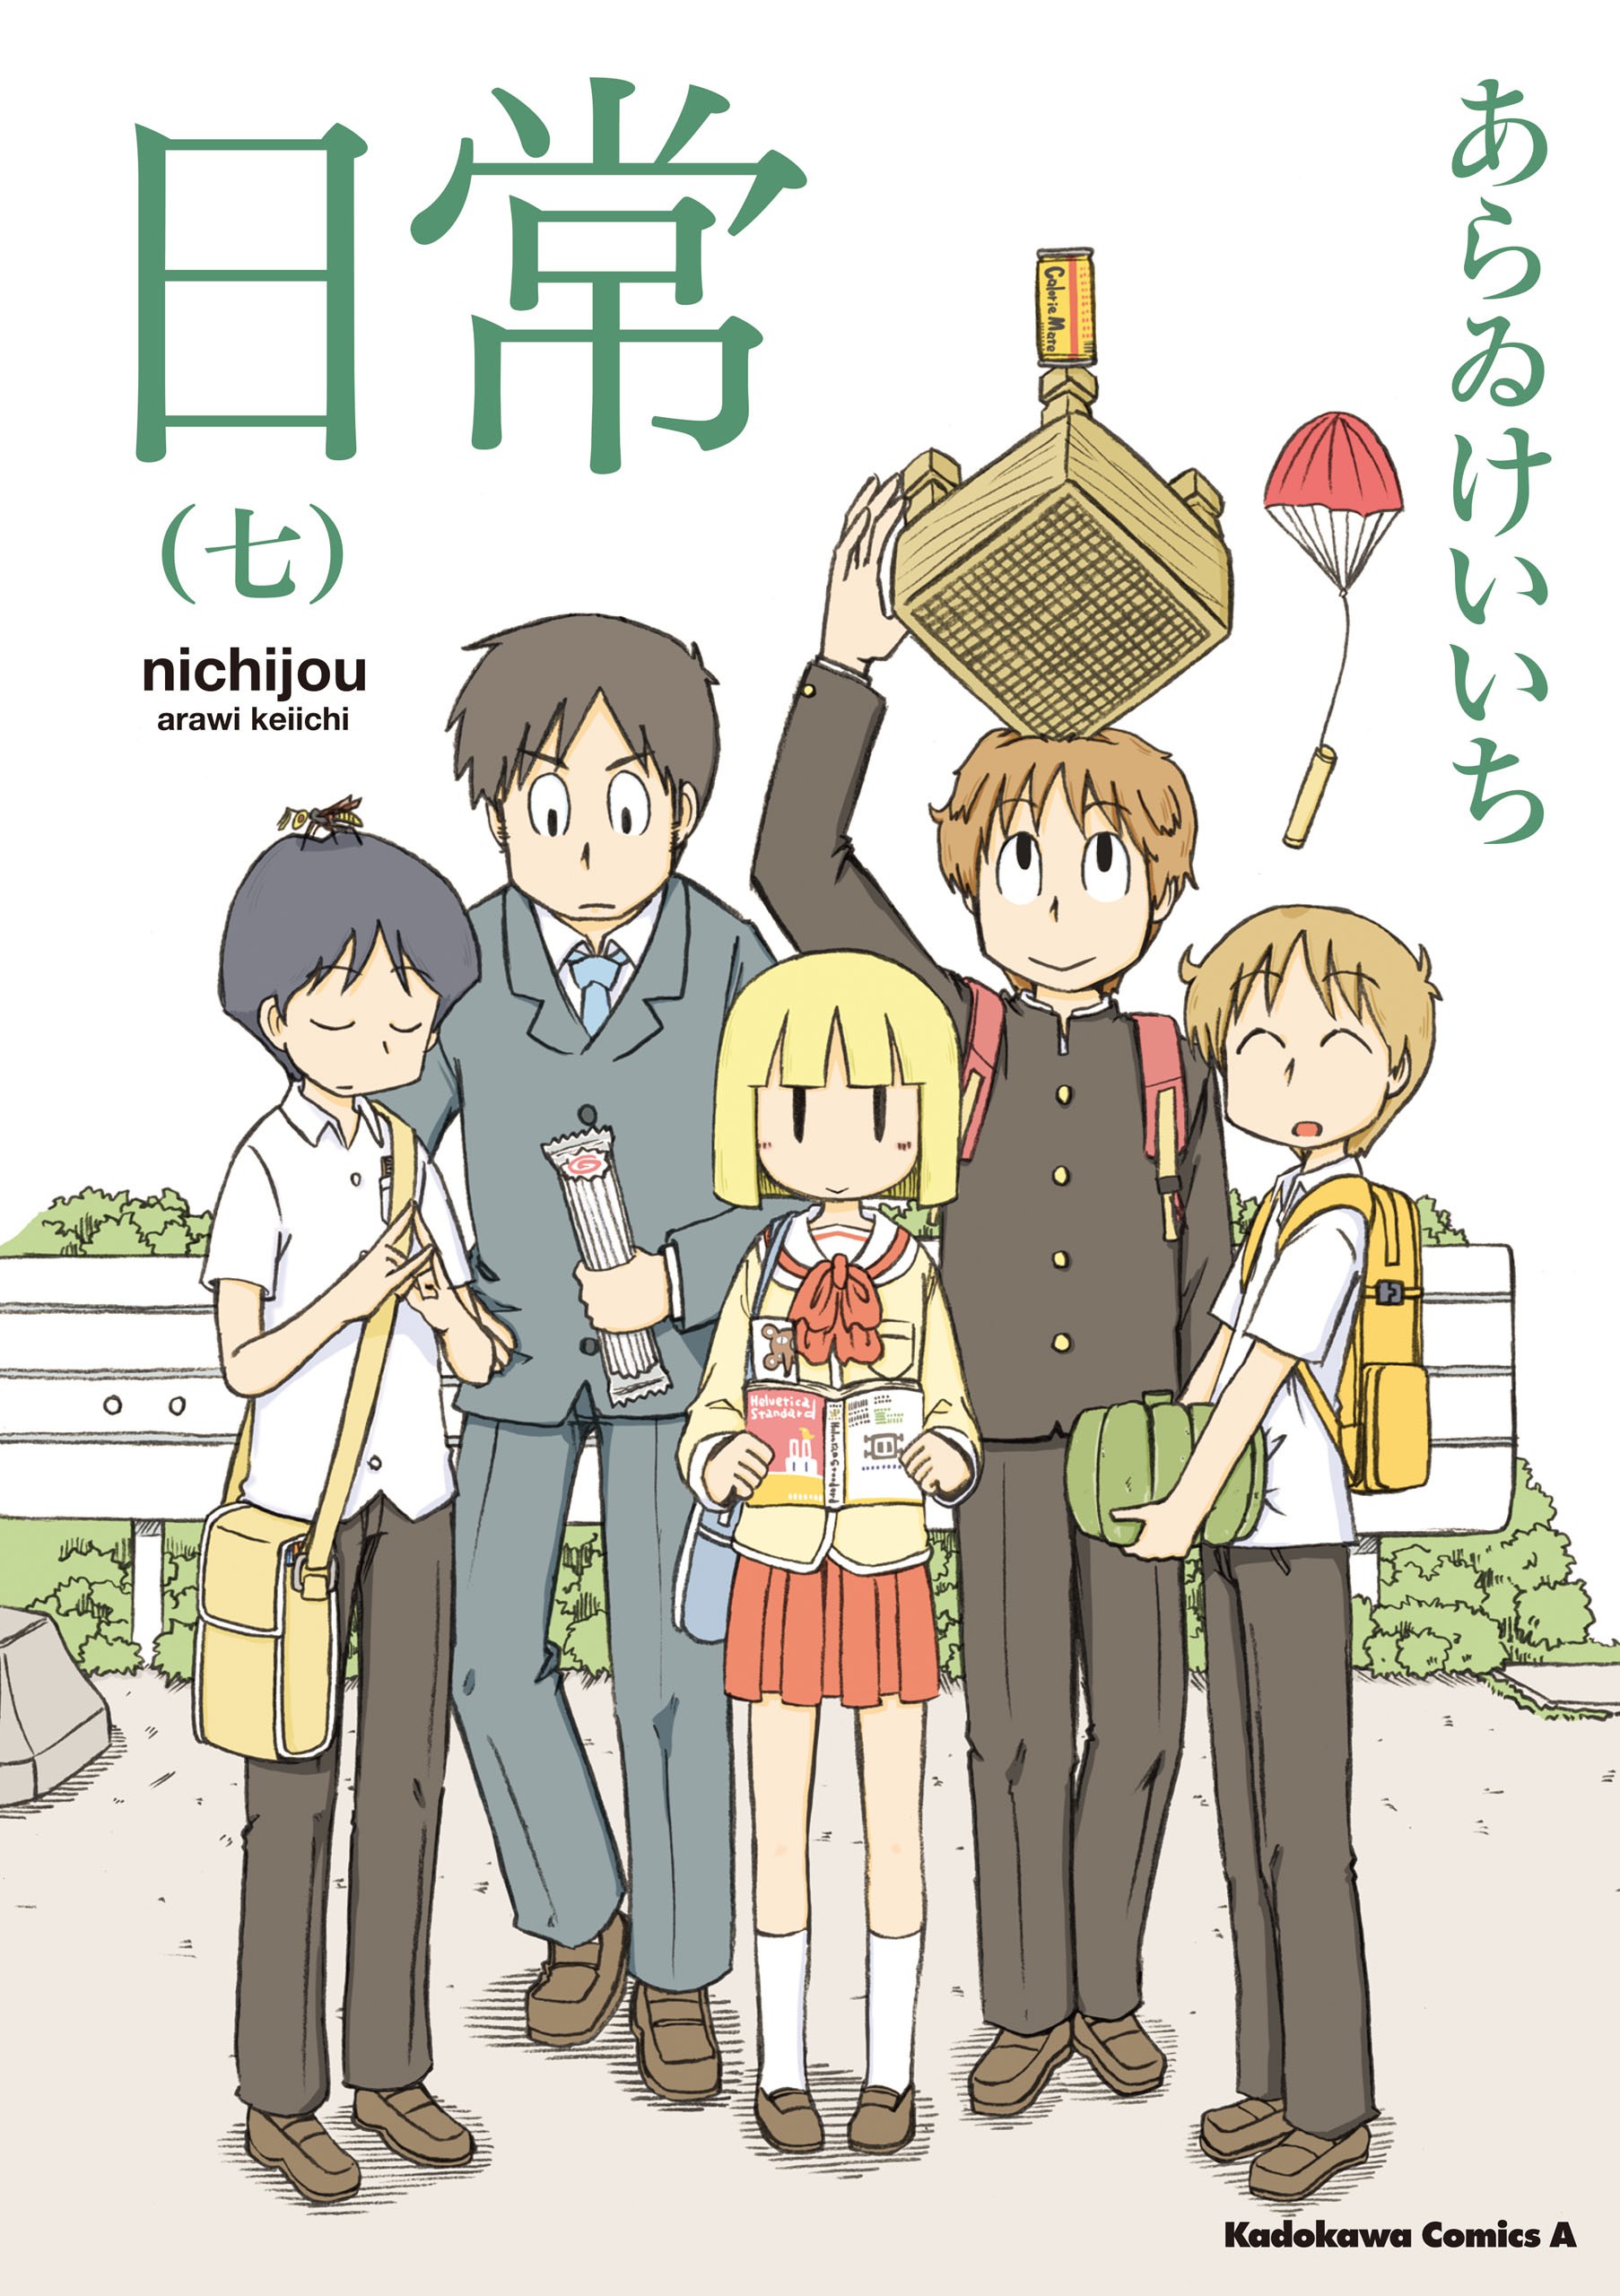 Nichijou cover 4